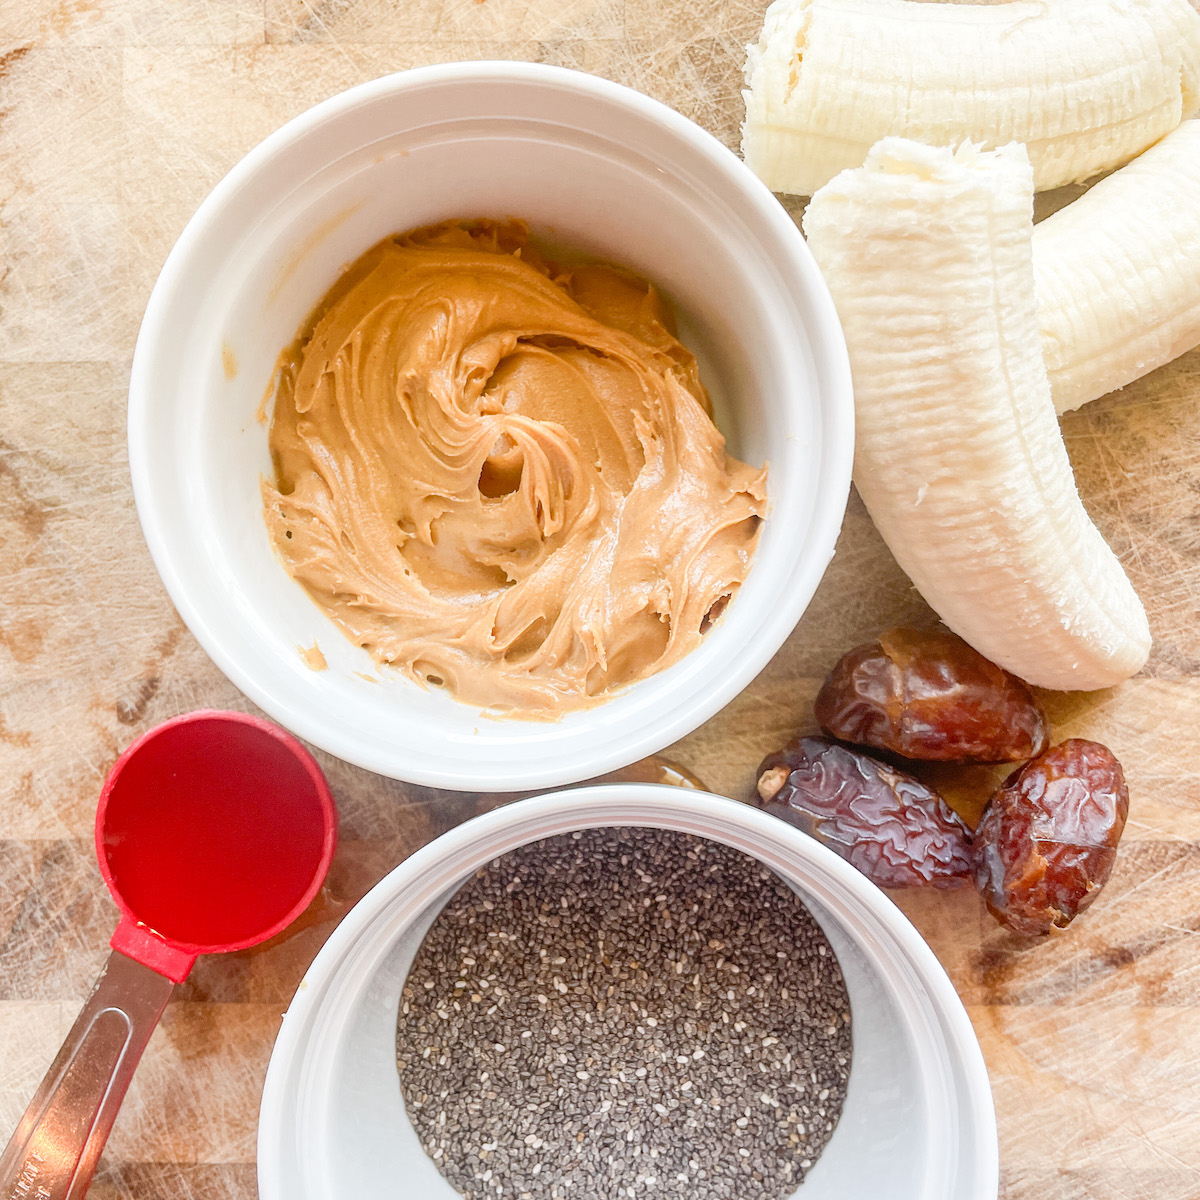 Tropical Smoothie Chia Banana Recipe (Peanut Butter)